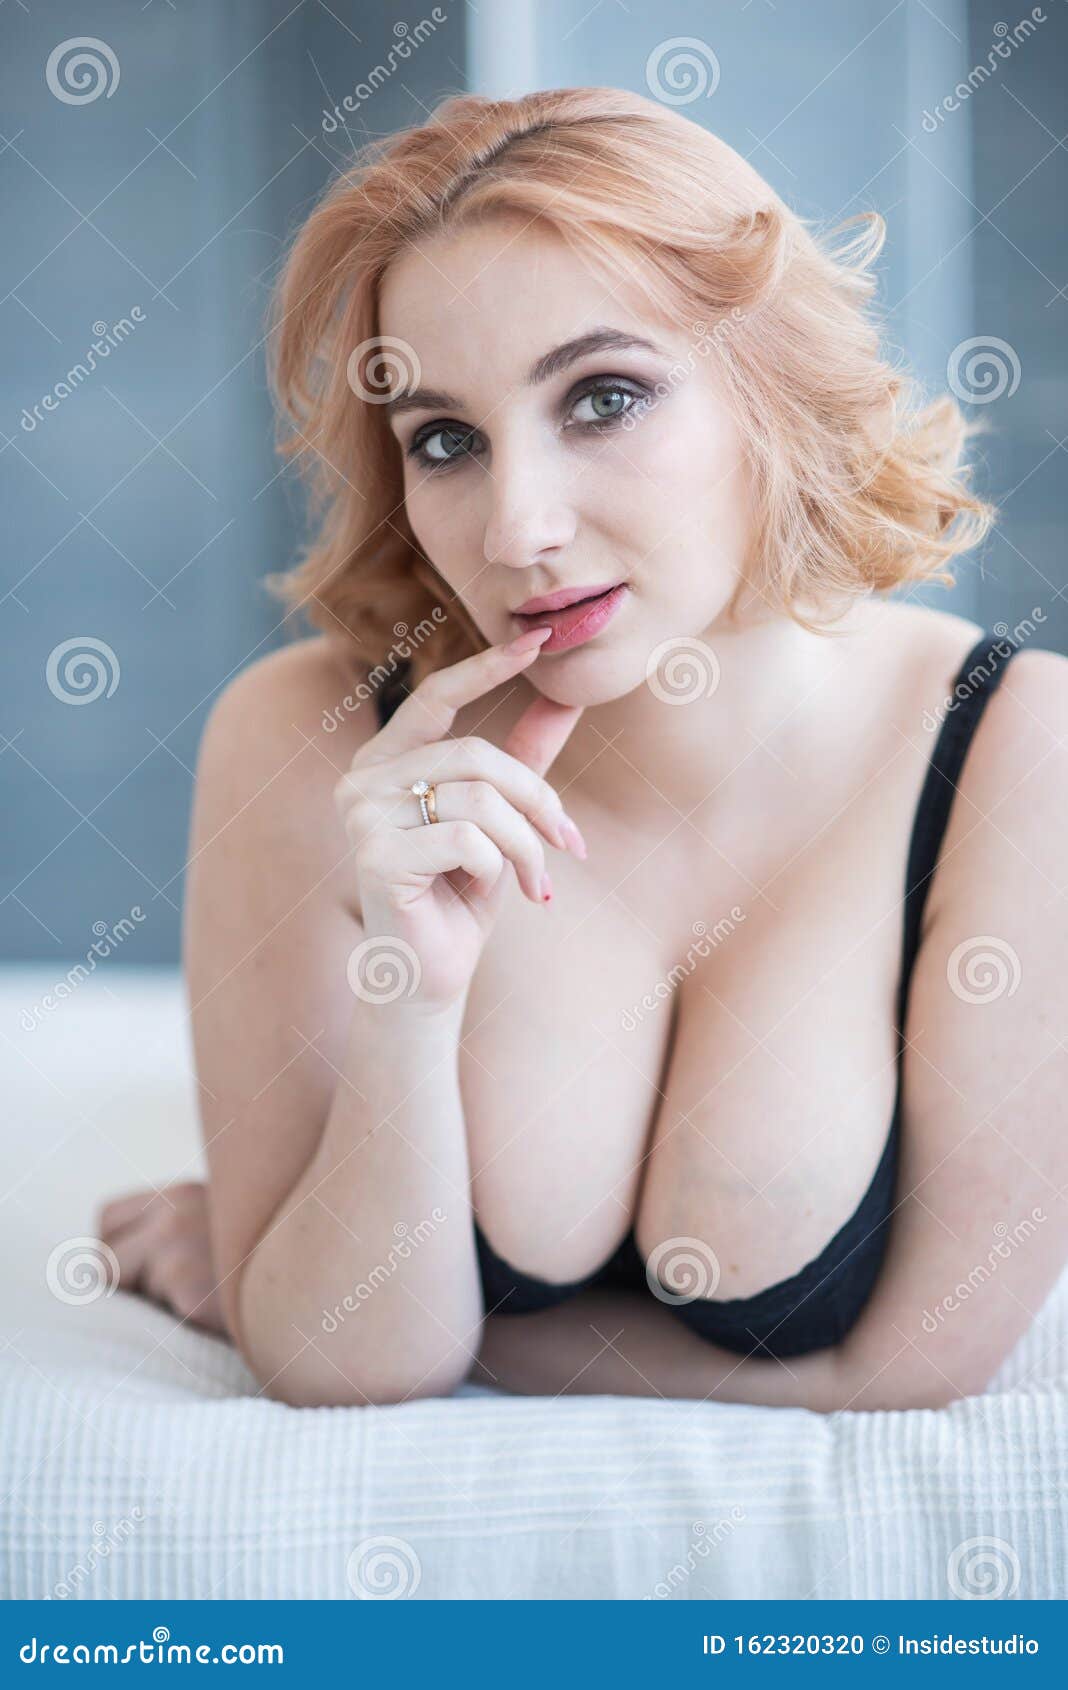 https://thumbs.dreamstime.com/z/european-girl-cute-face-big-breasts-black-underwear-lies-her-stomach-very-sexy-162320320.jpg